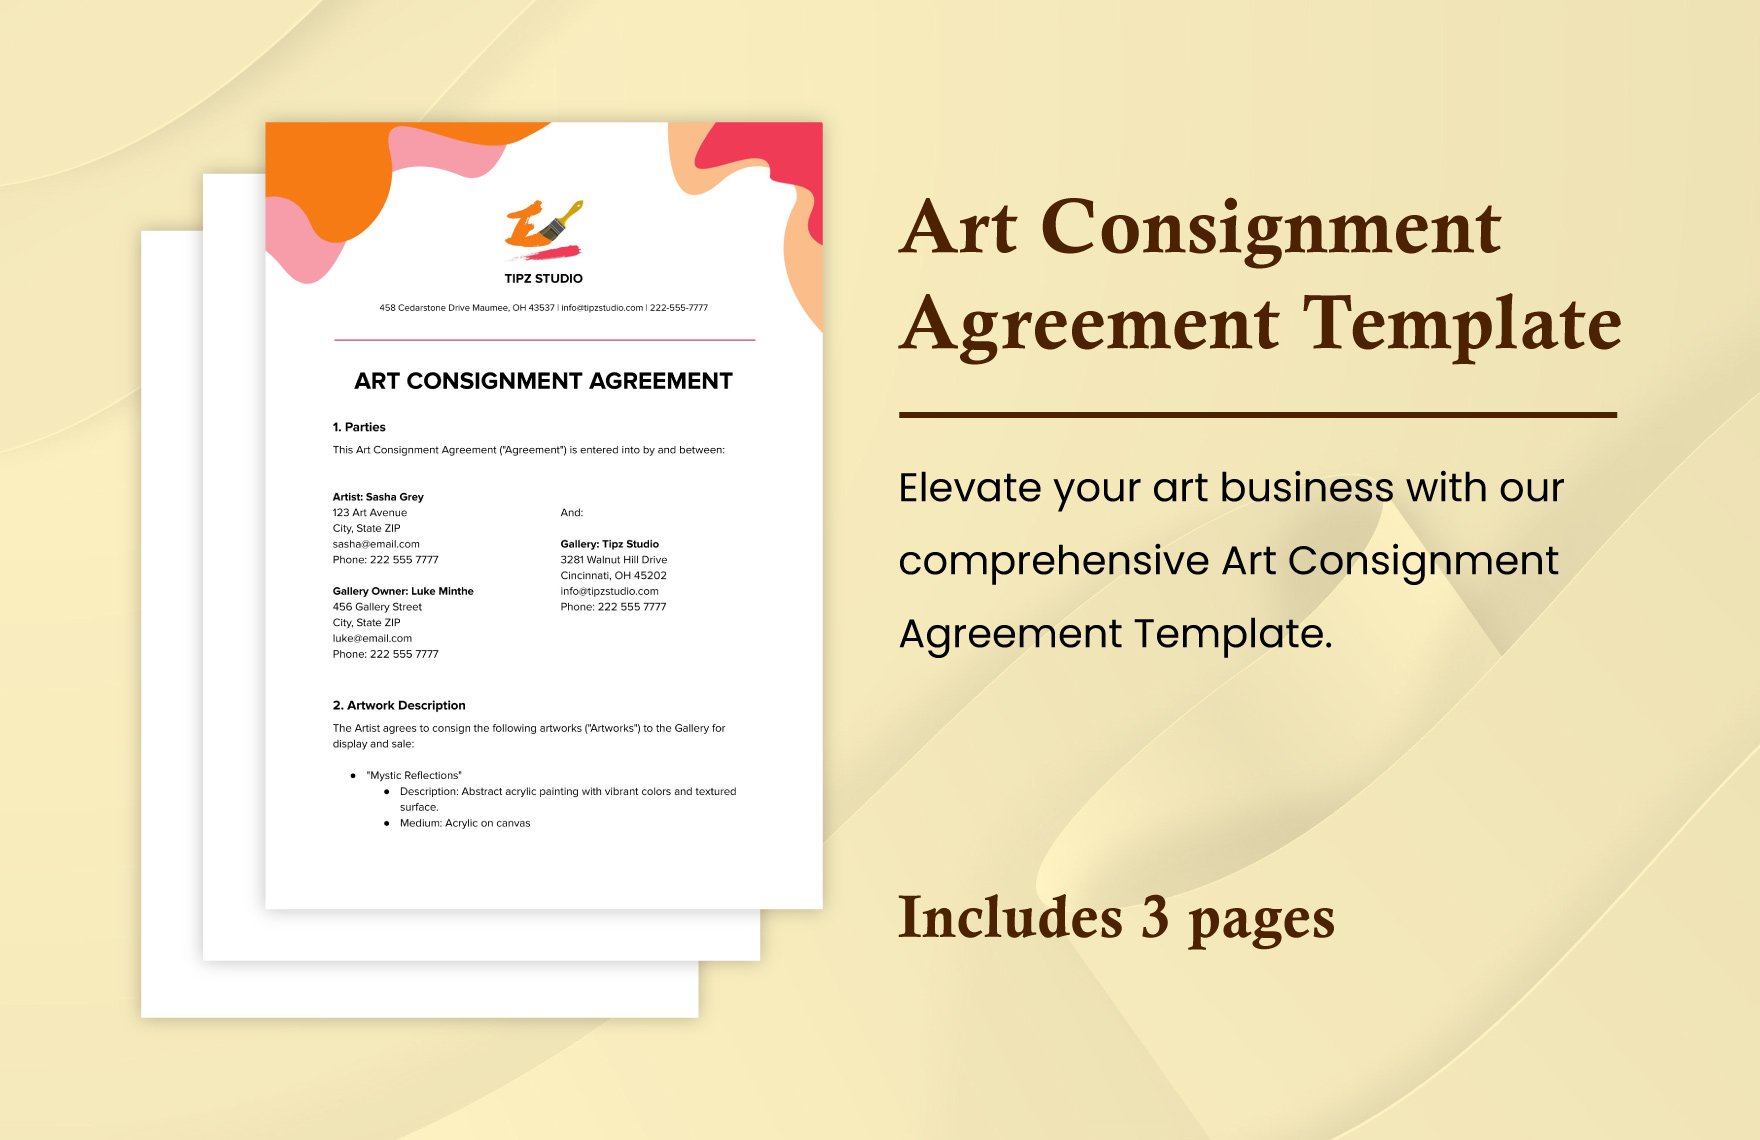 Art Consignment Agreement Template